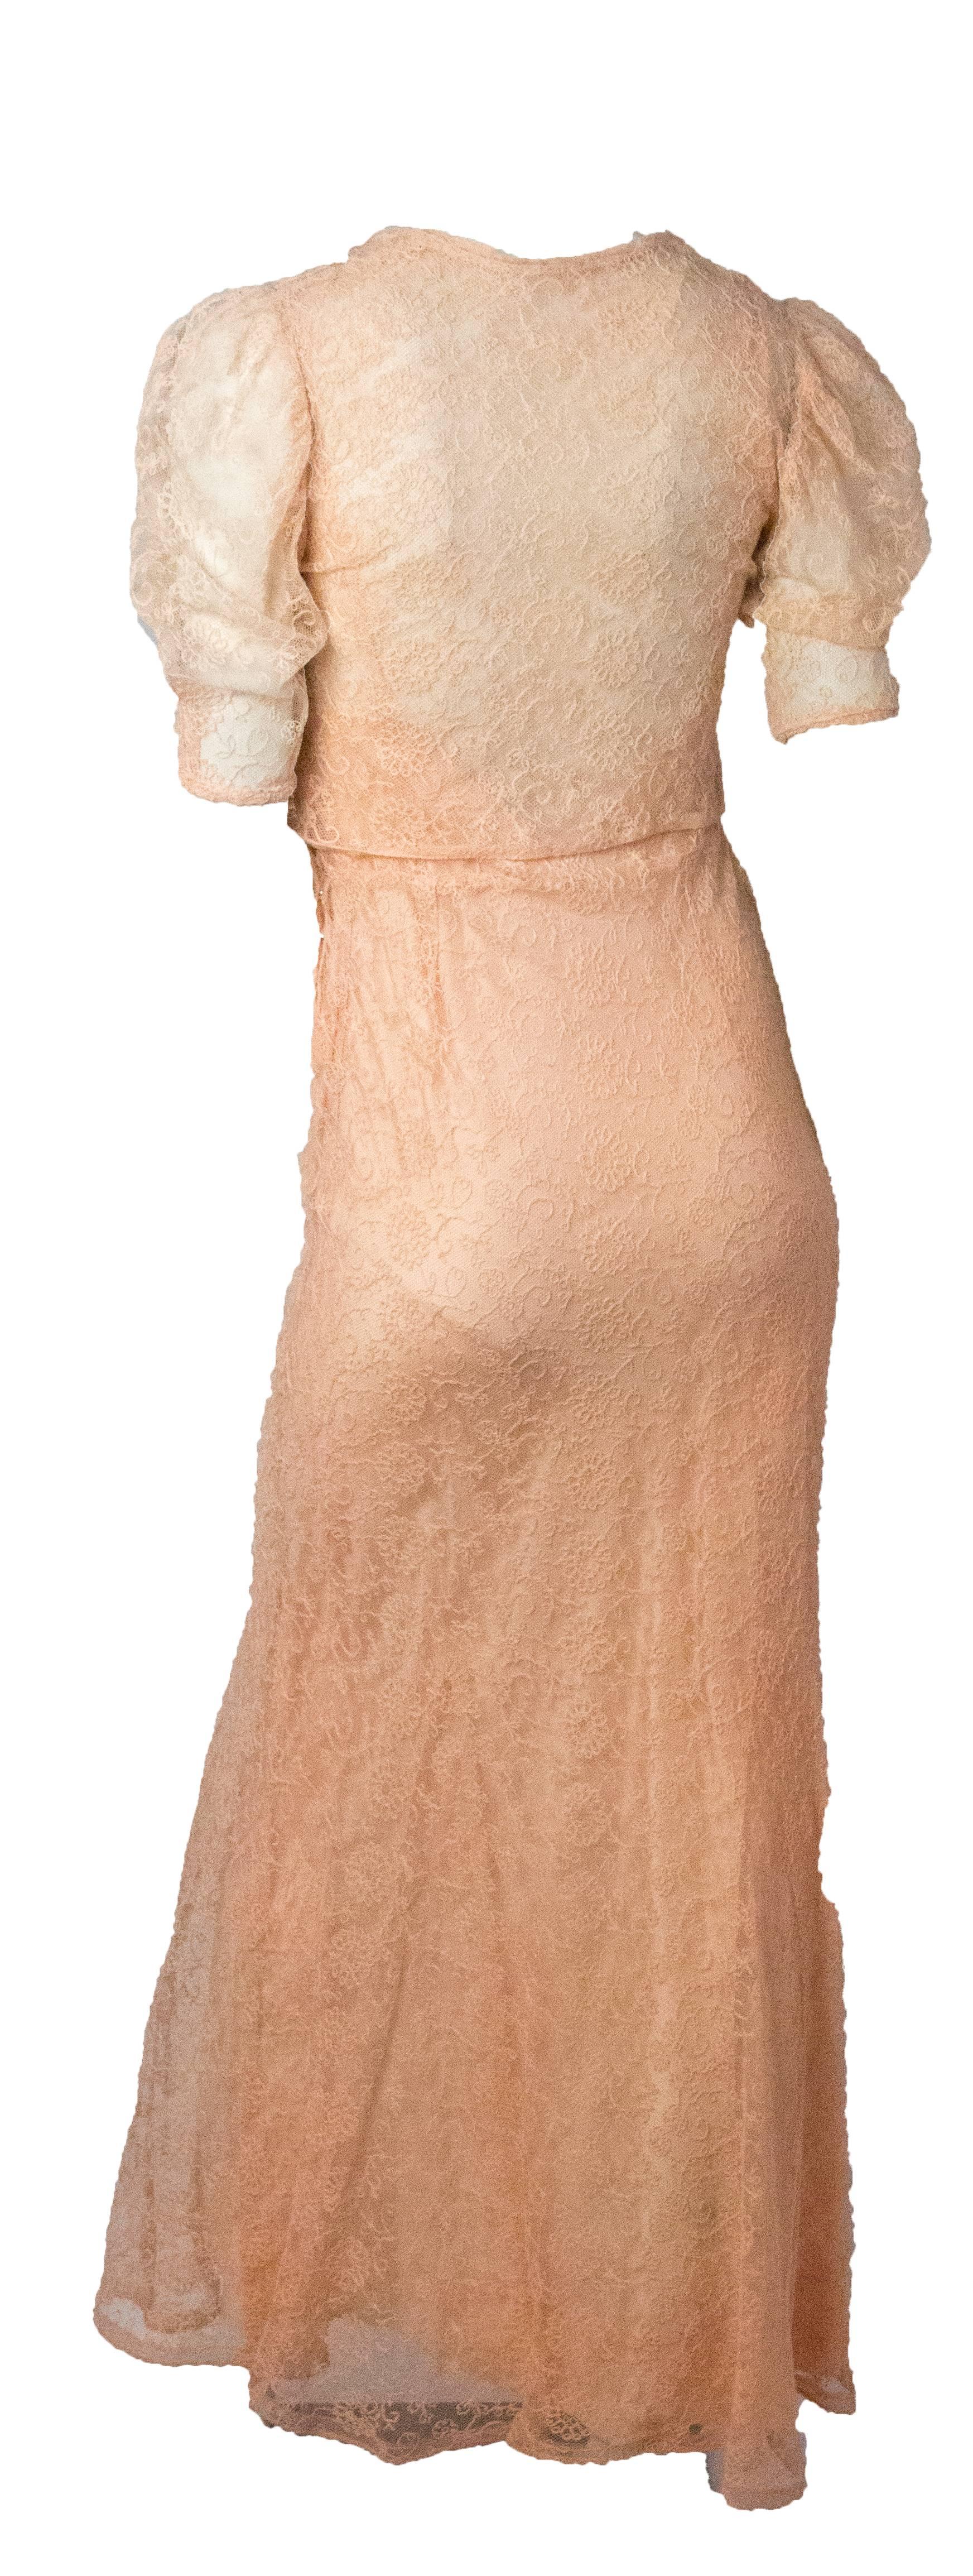 30s pink lace 3 piece dress with matching bias cut slip and bolero jacket. 